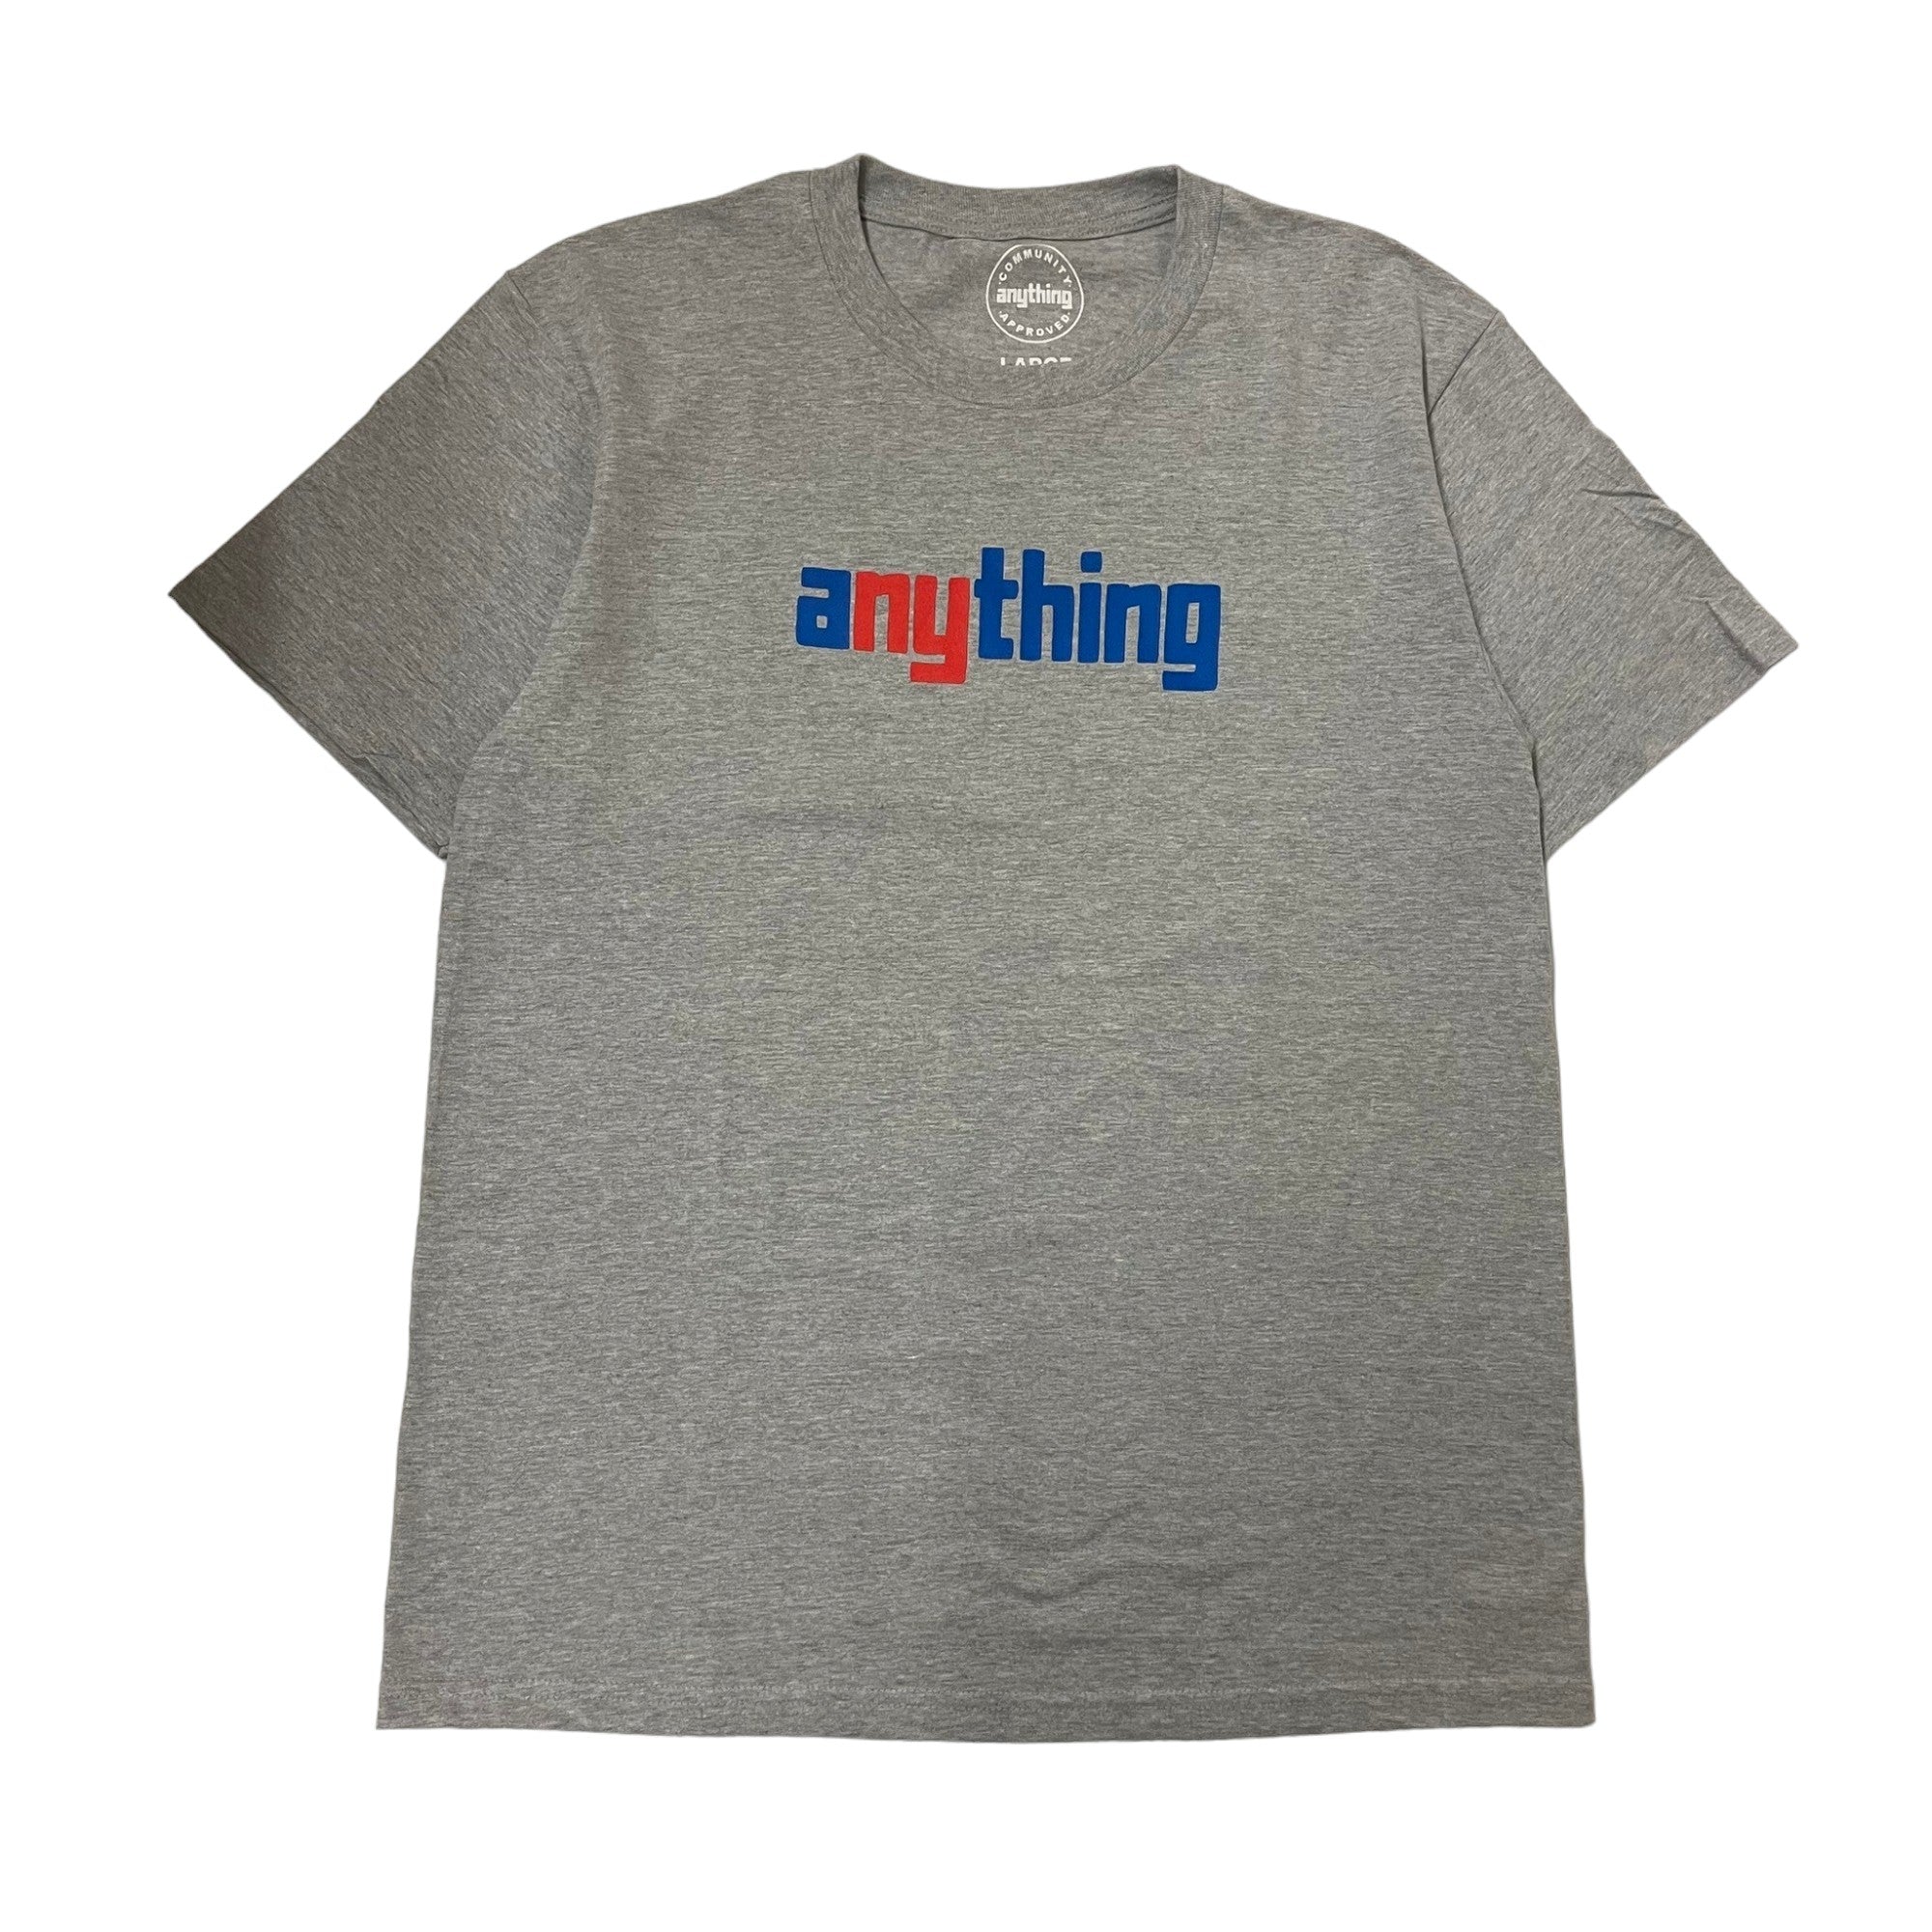 aNYthing / SPEED BALL LOGO T-SHIRT